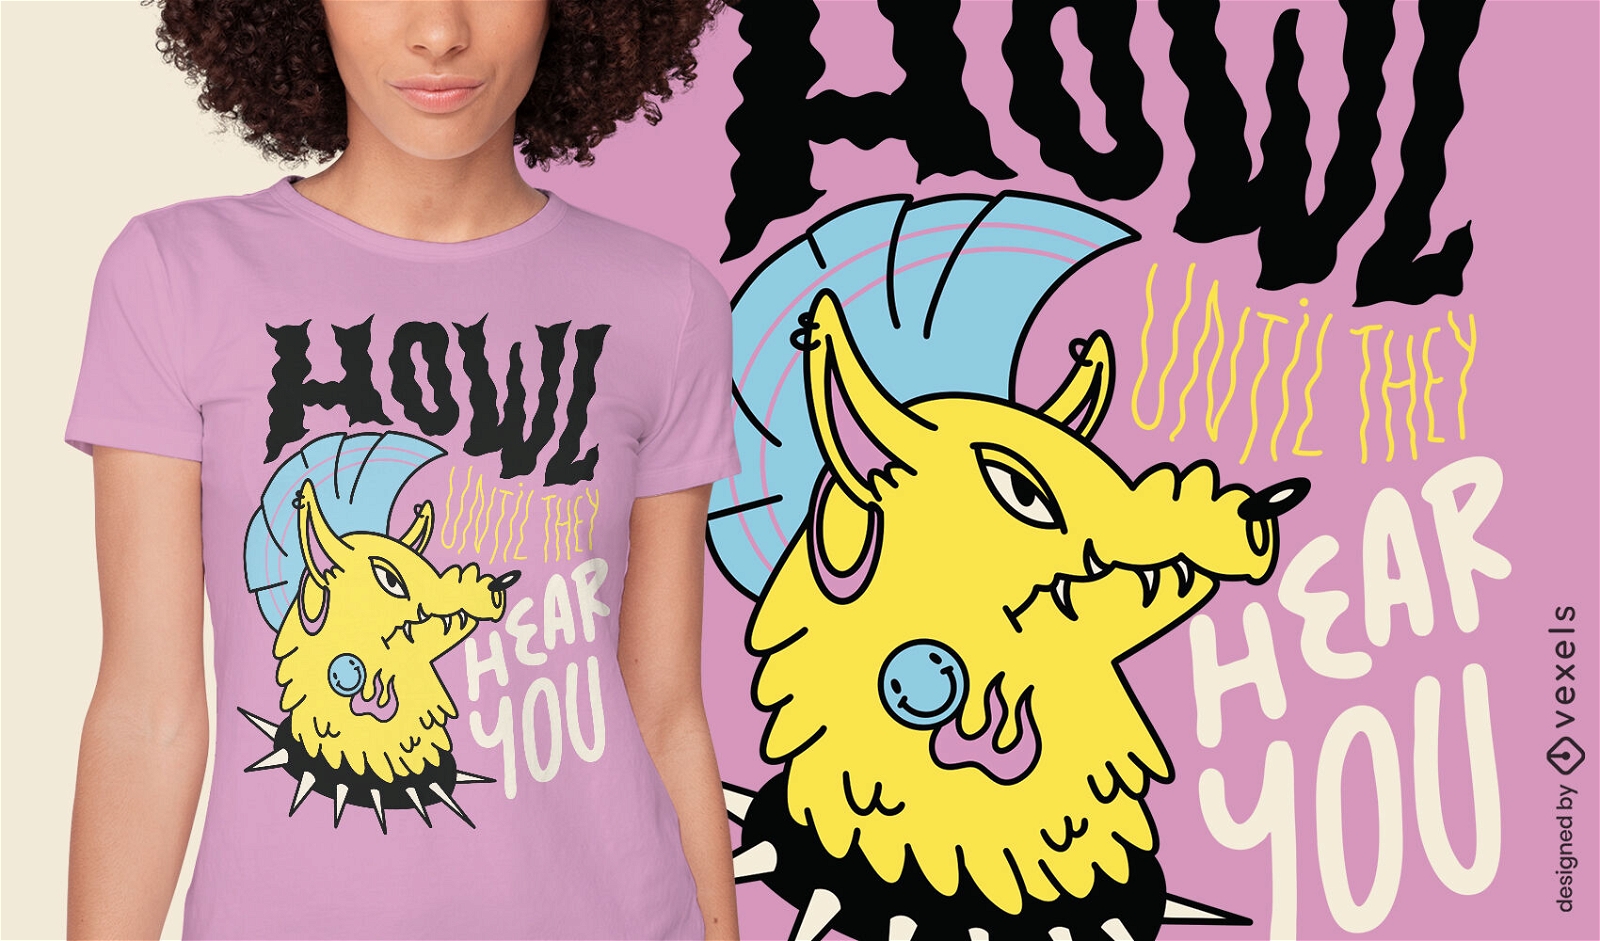 Punk wolf quote t-shirt design